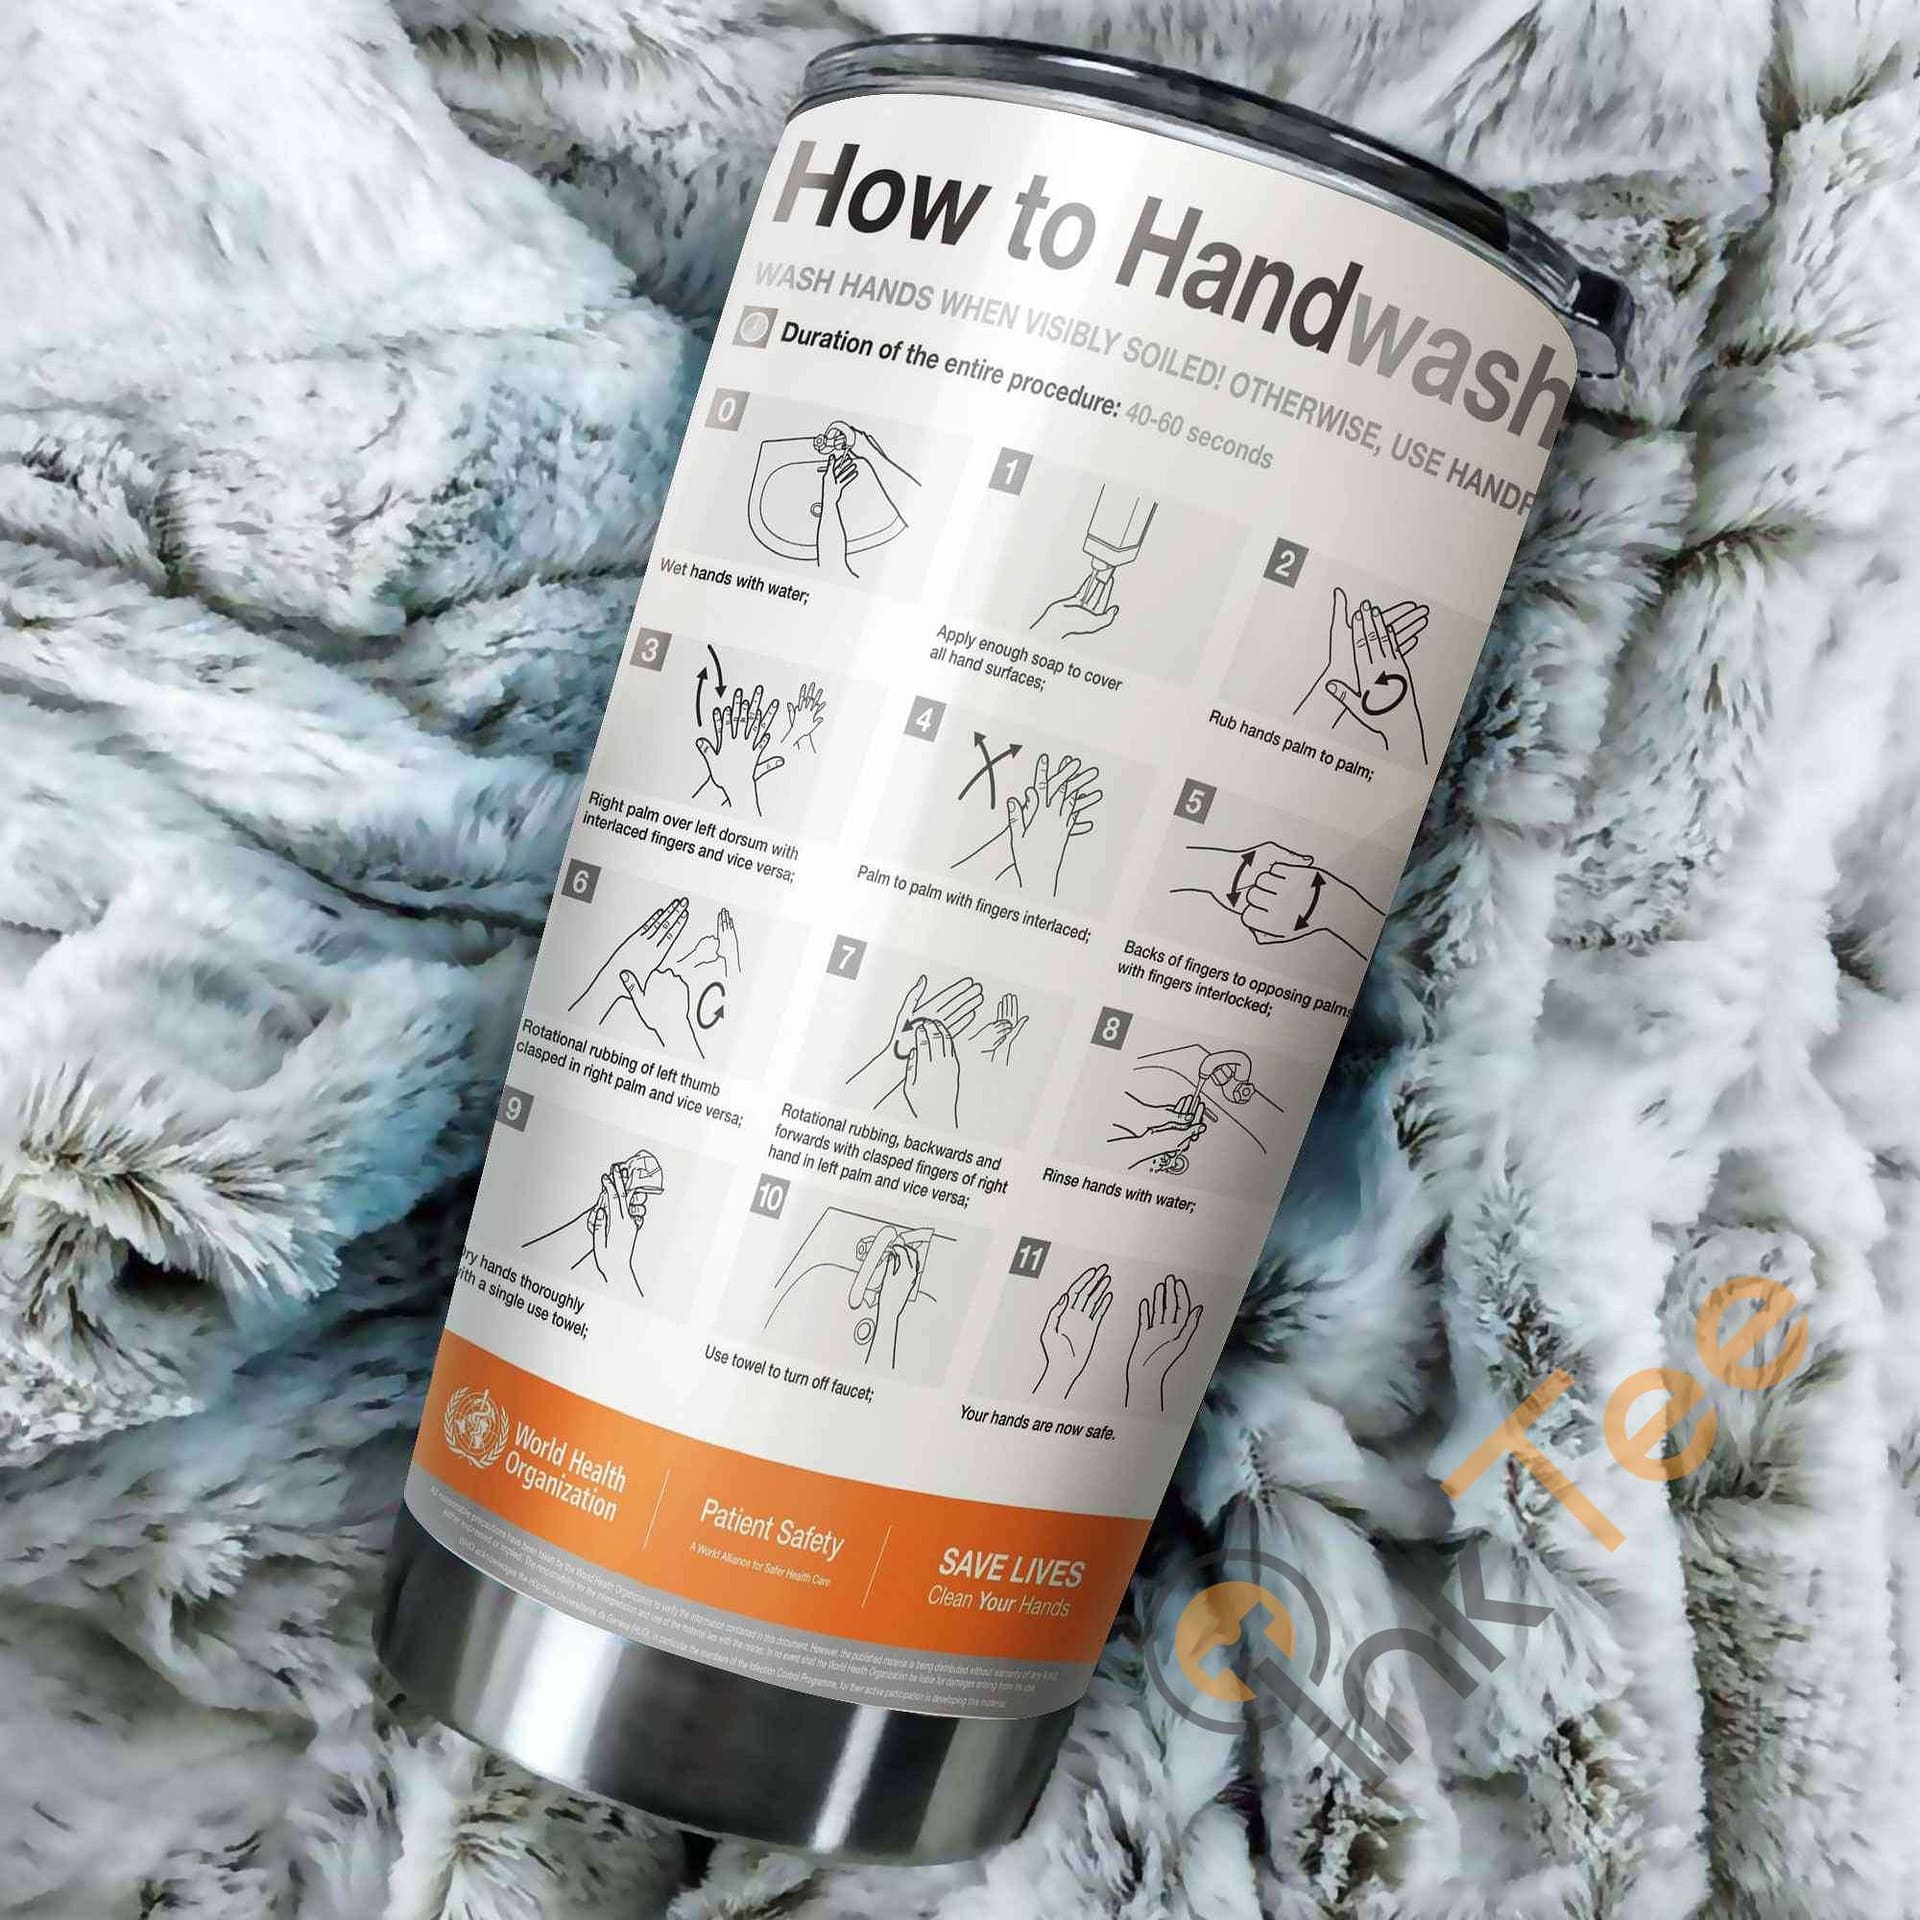 How To Handwash? Amazon Best Seller Sku 3404 Stainless Steel Tumbler